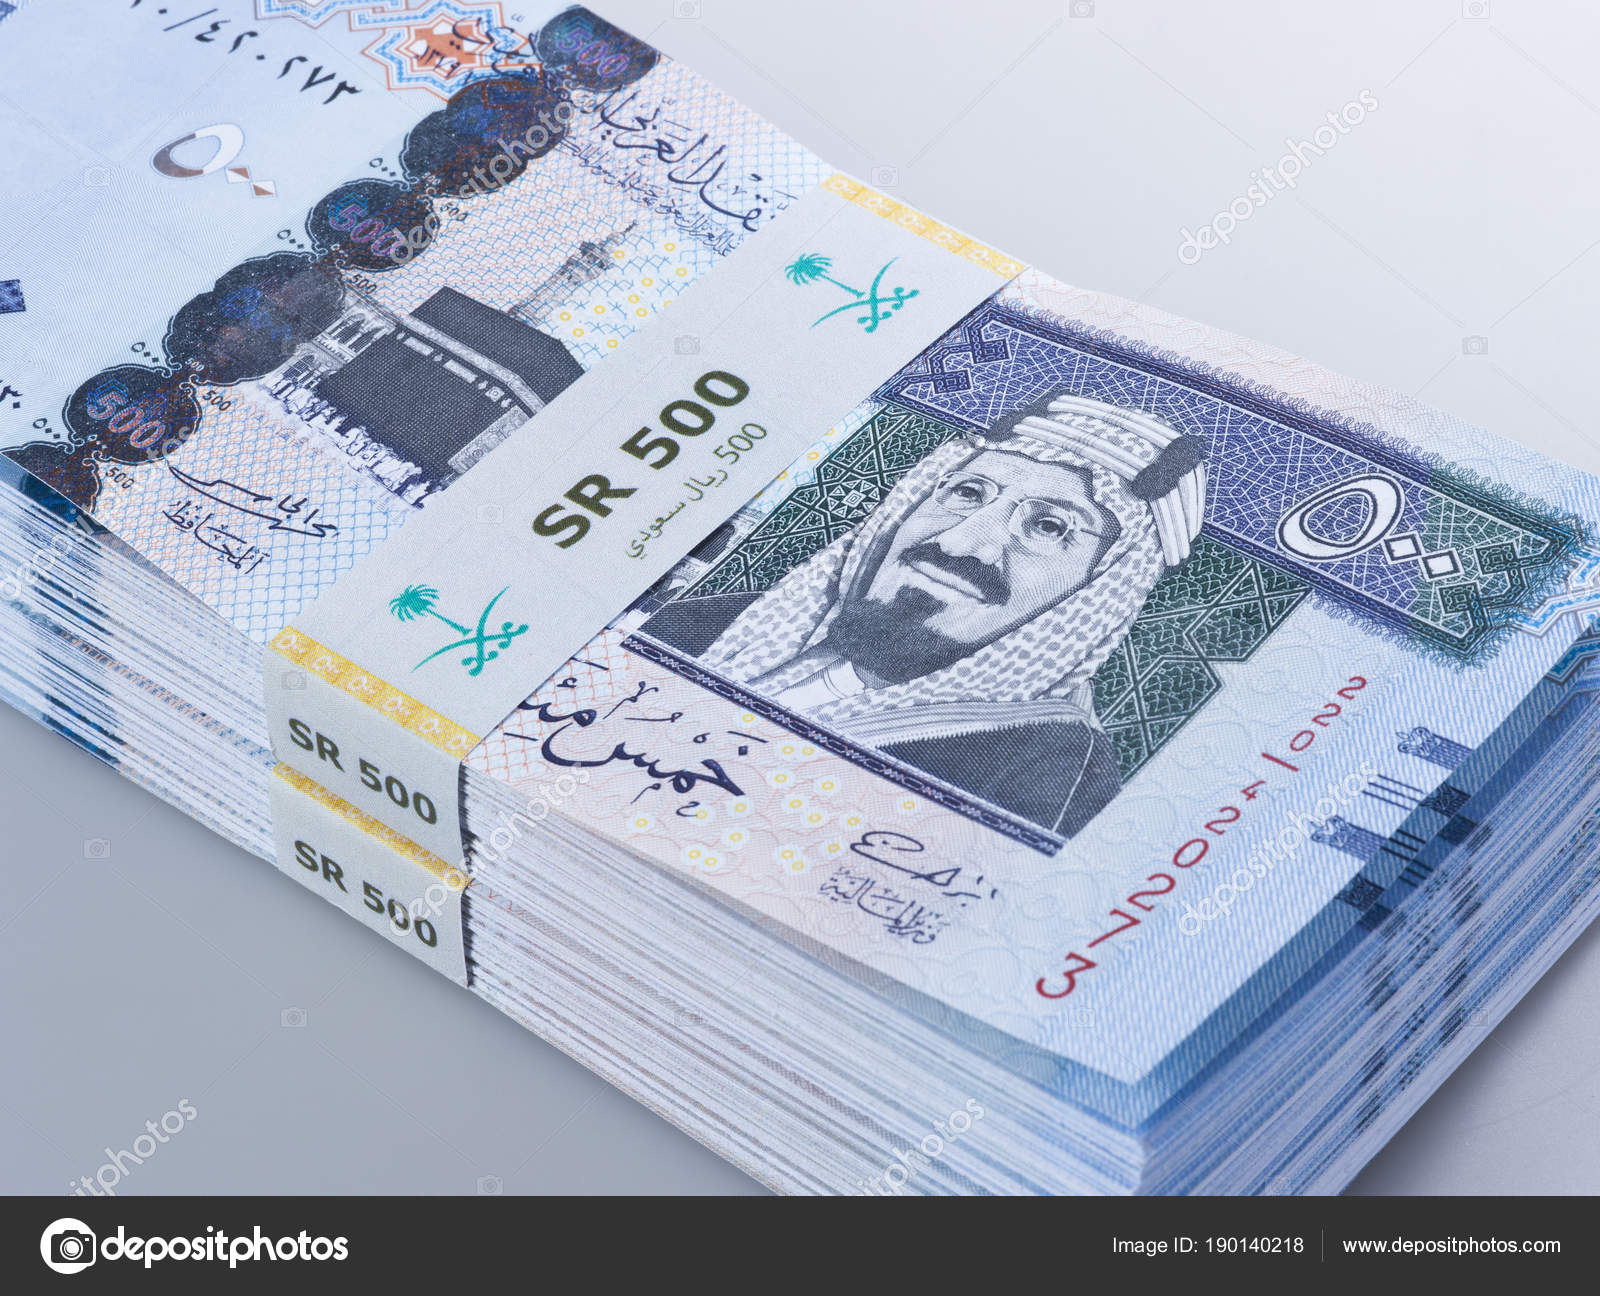 depositphotos_190140218-stock-photo-pile-of-saudi-riyal-banknotes.jpg